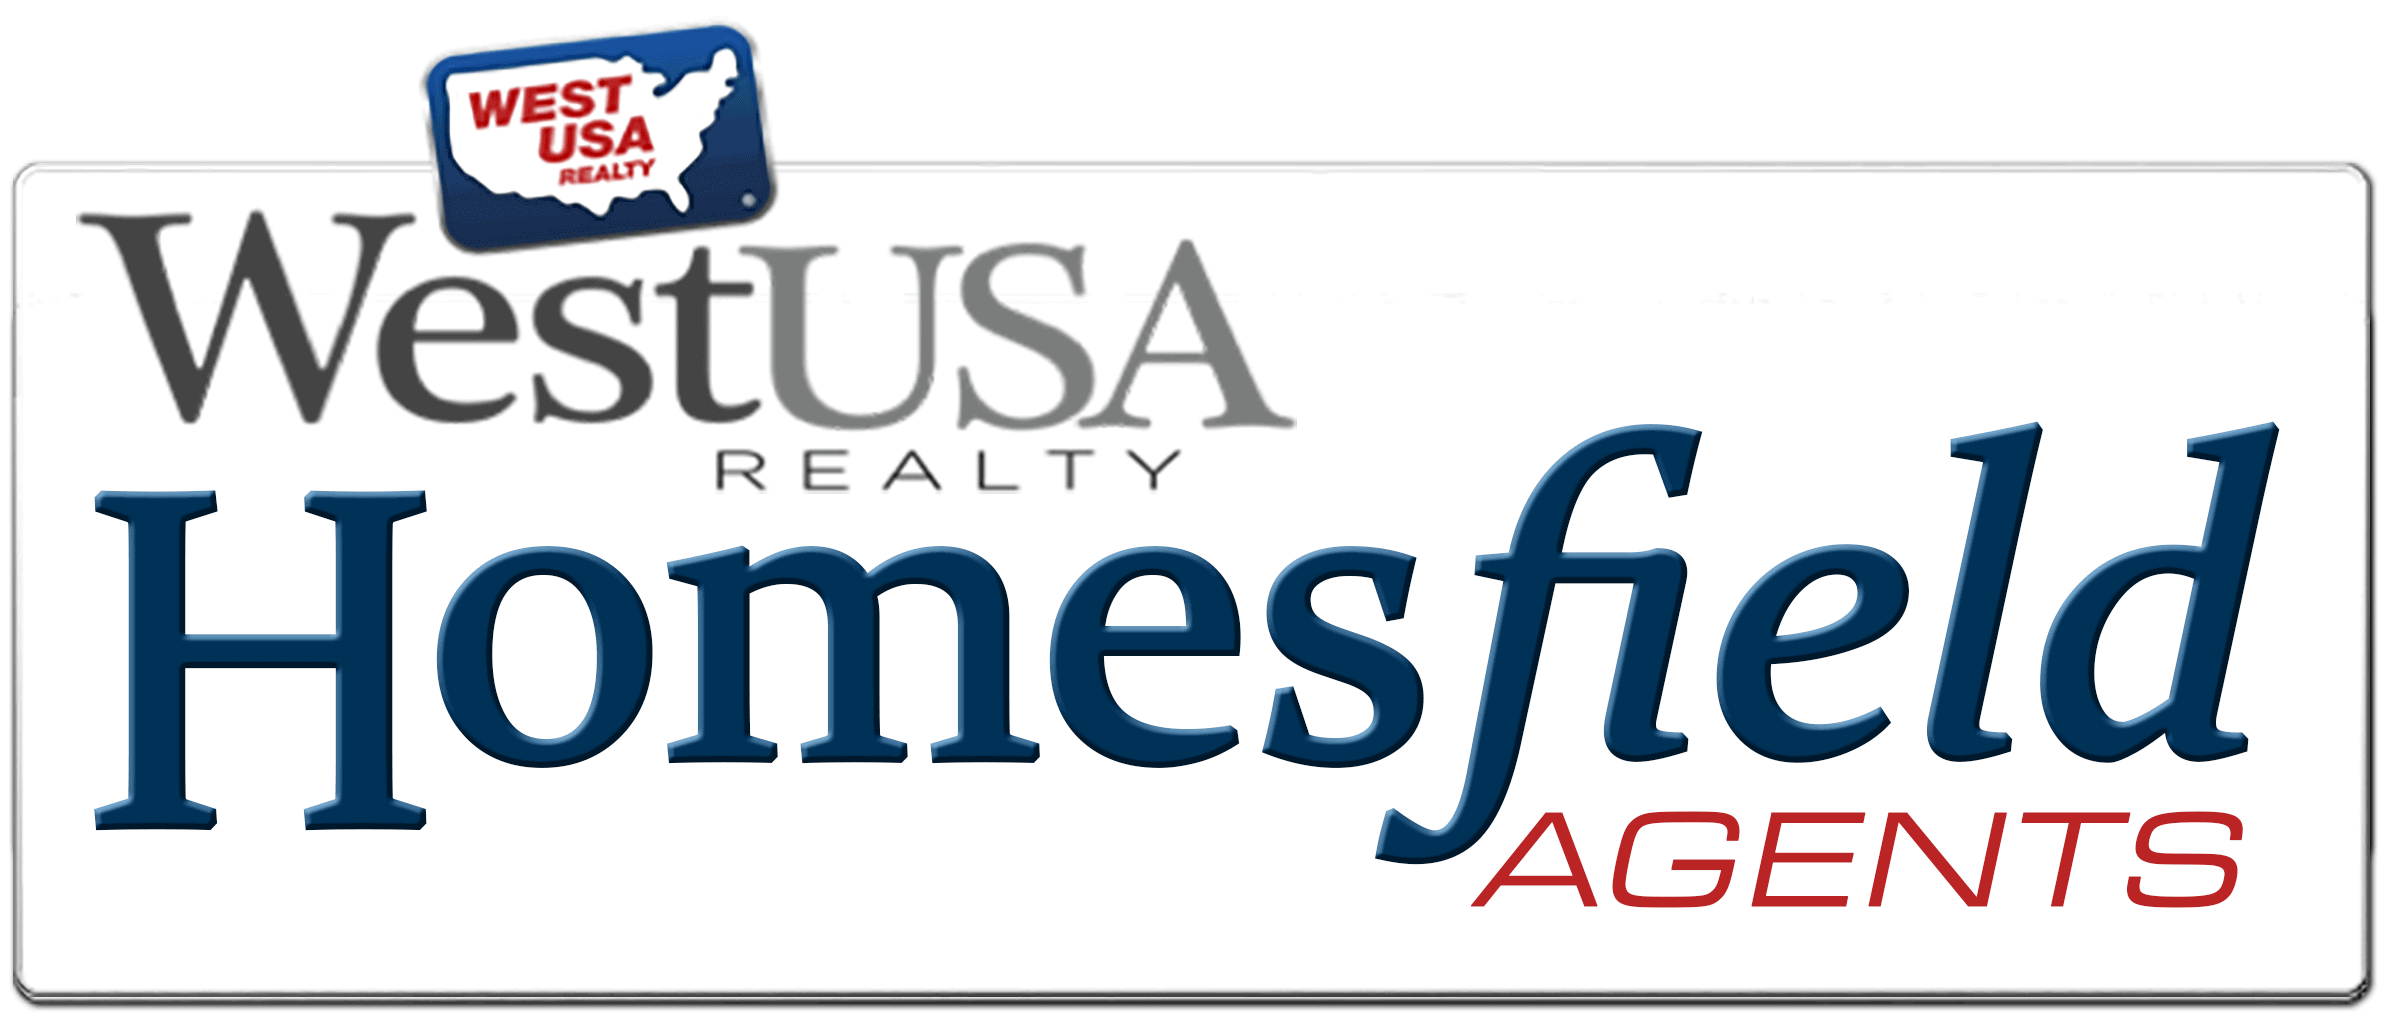 West USA Realty's Homesfield Agents in Phoenix Arizona